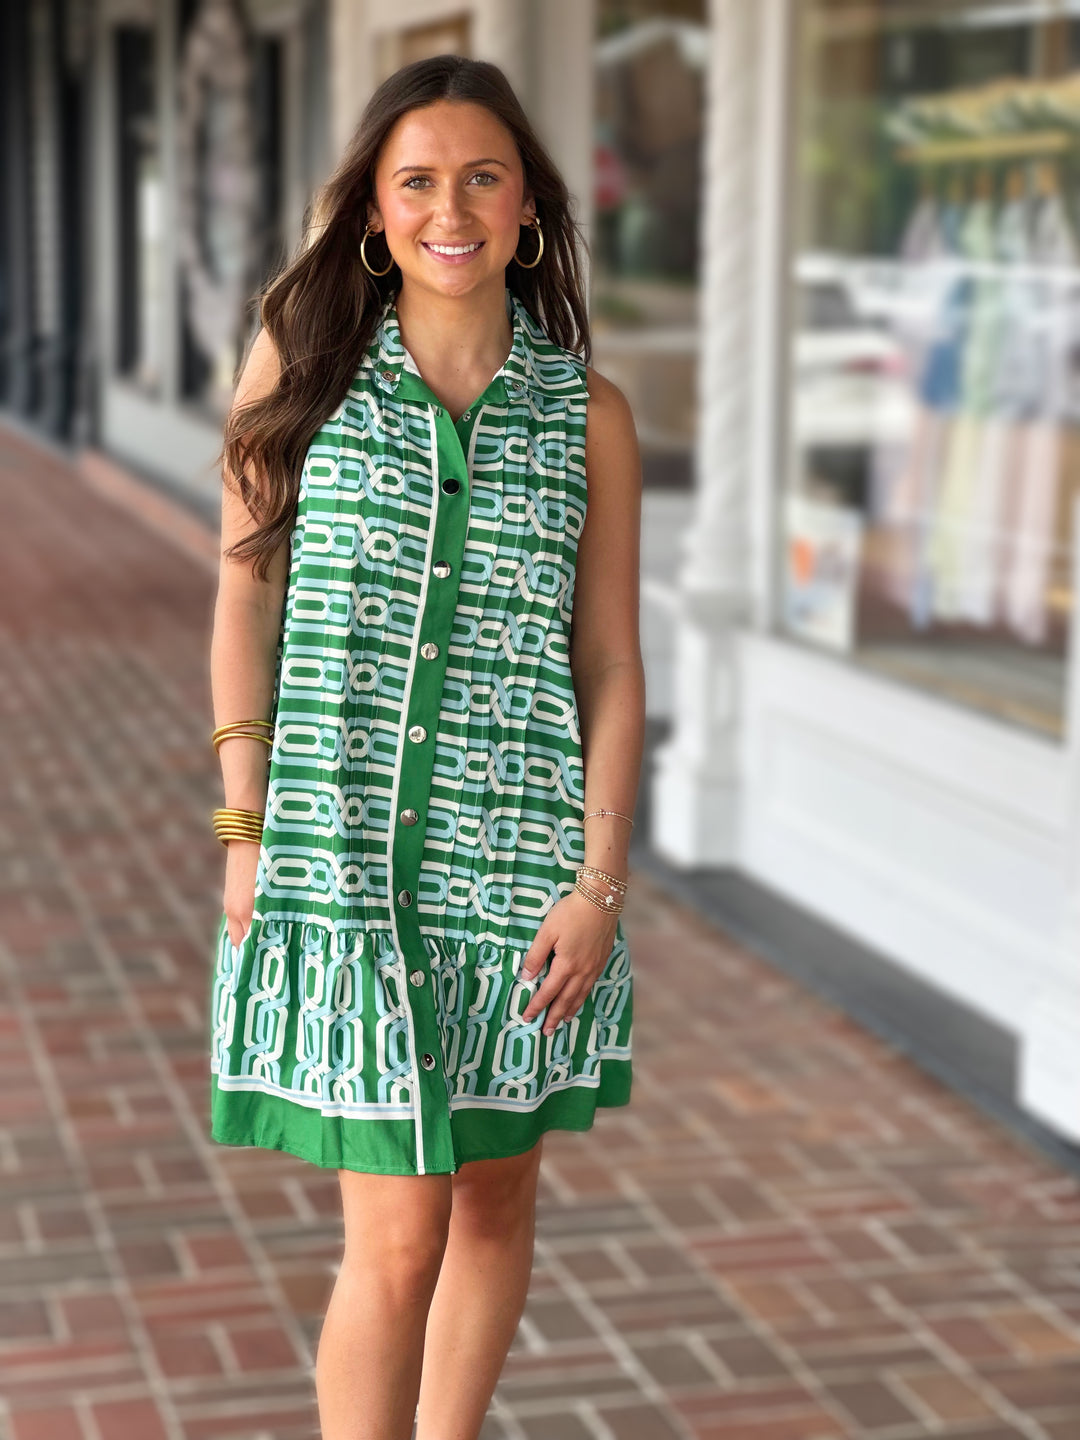 Good Flows To Me Printed Green Dress